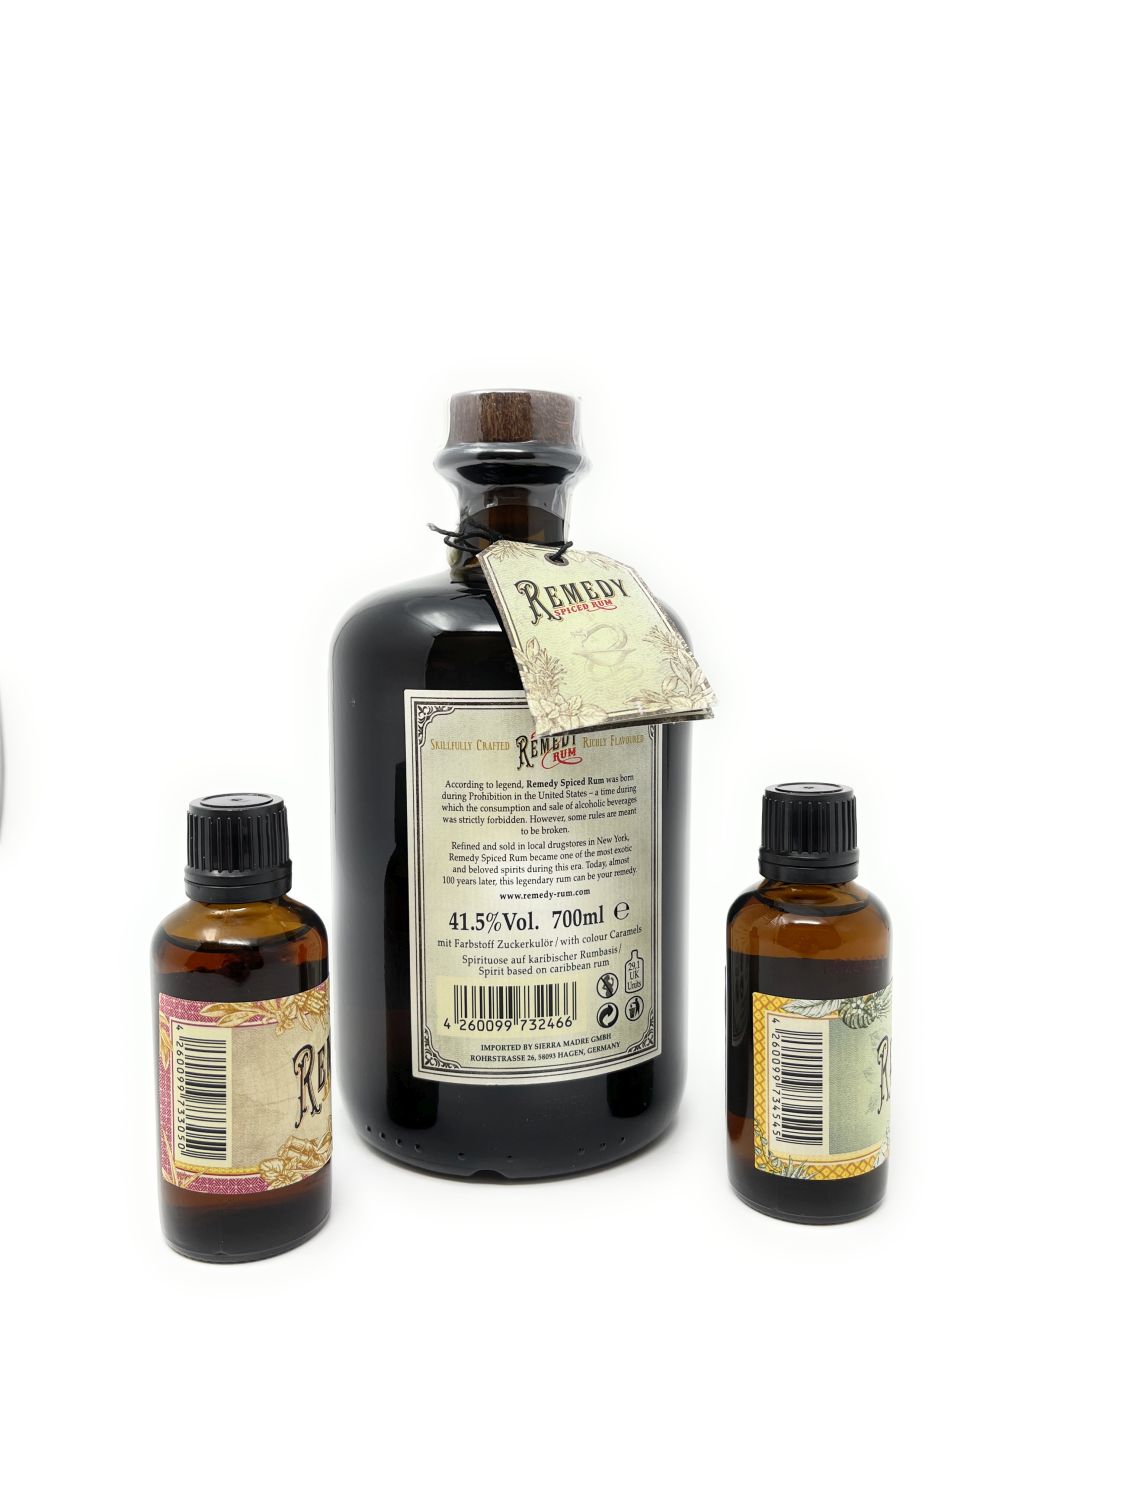 Spiced l / Spirituosen vol. :: 1x 2x Rum 0,05 34-41,5% l € Lebensmittel :: 31,24 0,7 Alkohol Set l Remedy